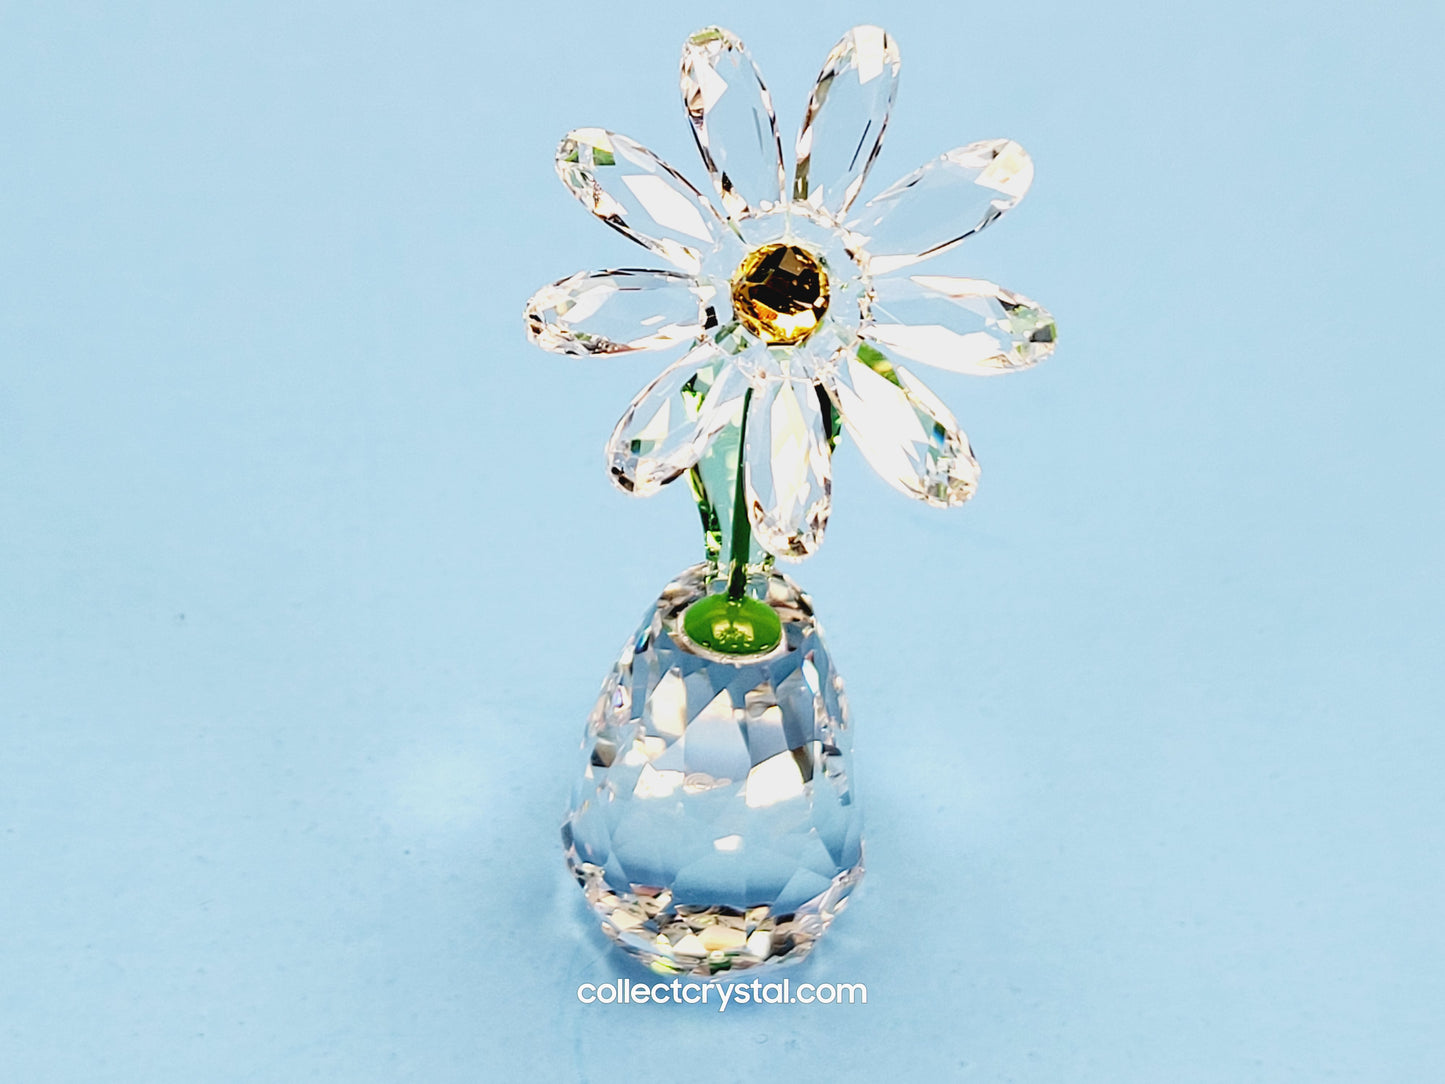 Dreams Daisy Flower Figurine 5454328